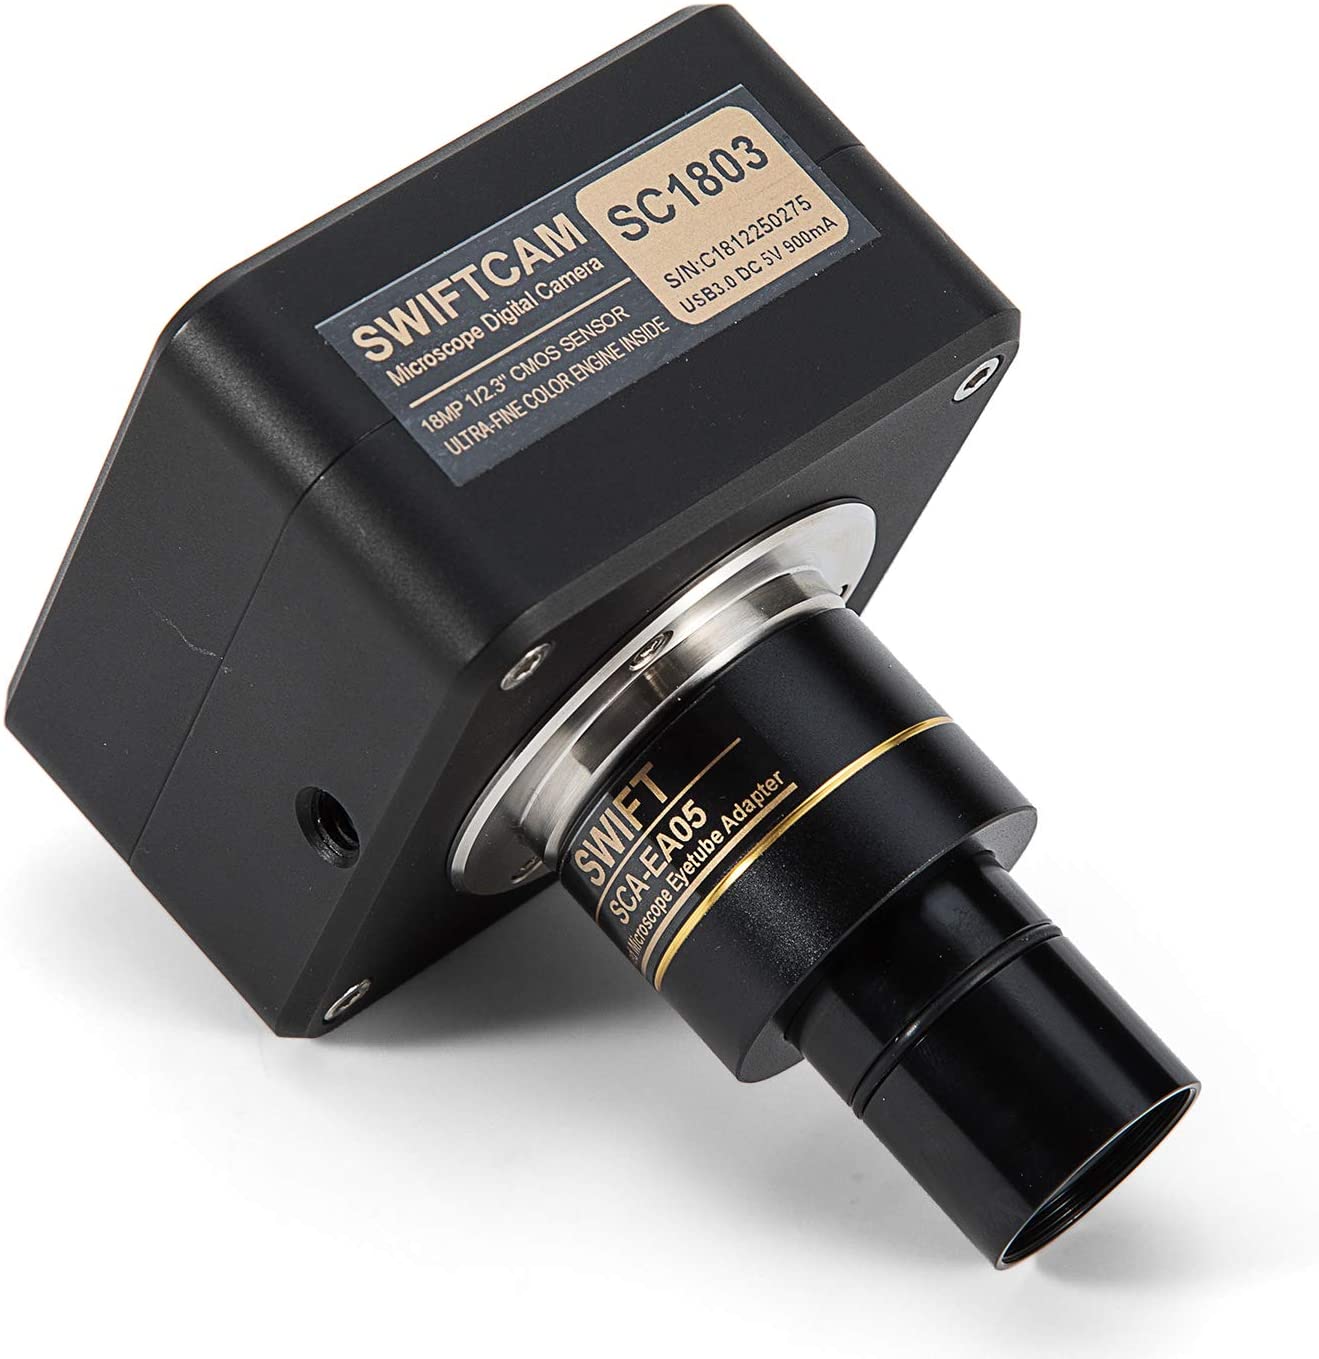 Swiftcam 	SC1803-CK Camara de 18mp para microscopios, lente de reducción kit de calibración adaptadores de Eyetube y cable USB 3.0 Windows/Mac/Linux